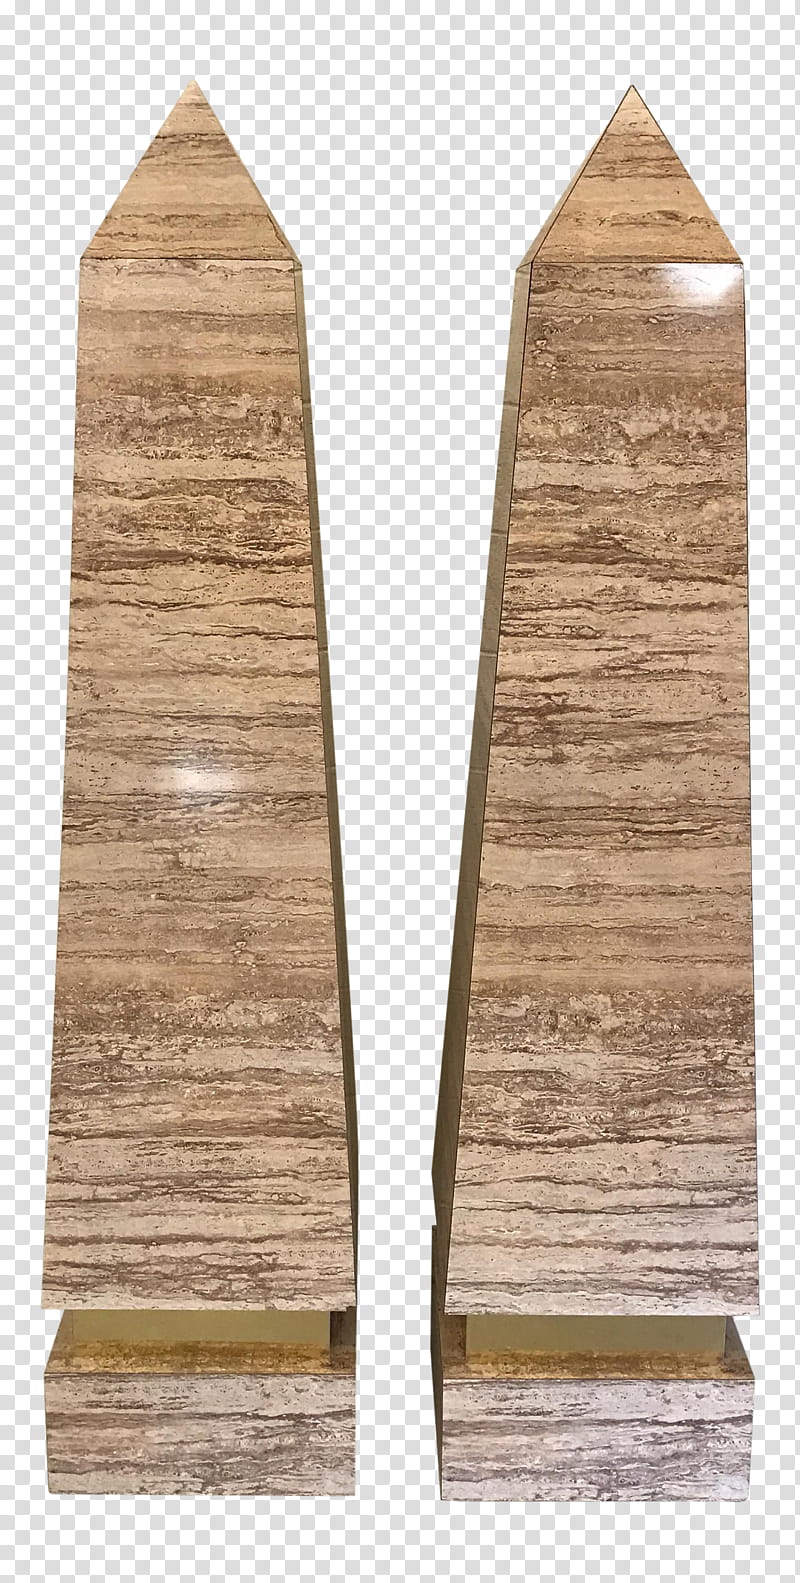 Wood, Plywood, Wood Stain, Lumber, Angle, Hardwood, Longboard, Obelisk transparent background PNG clipart